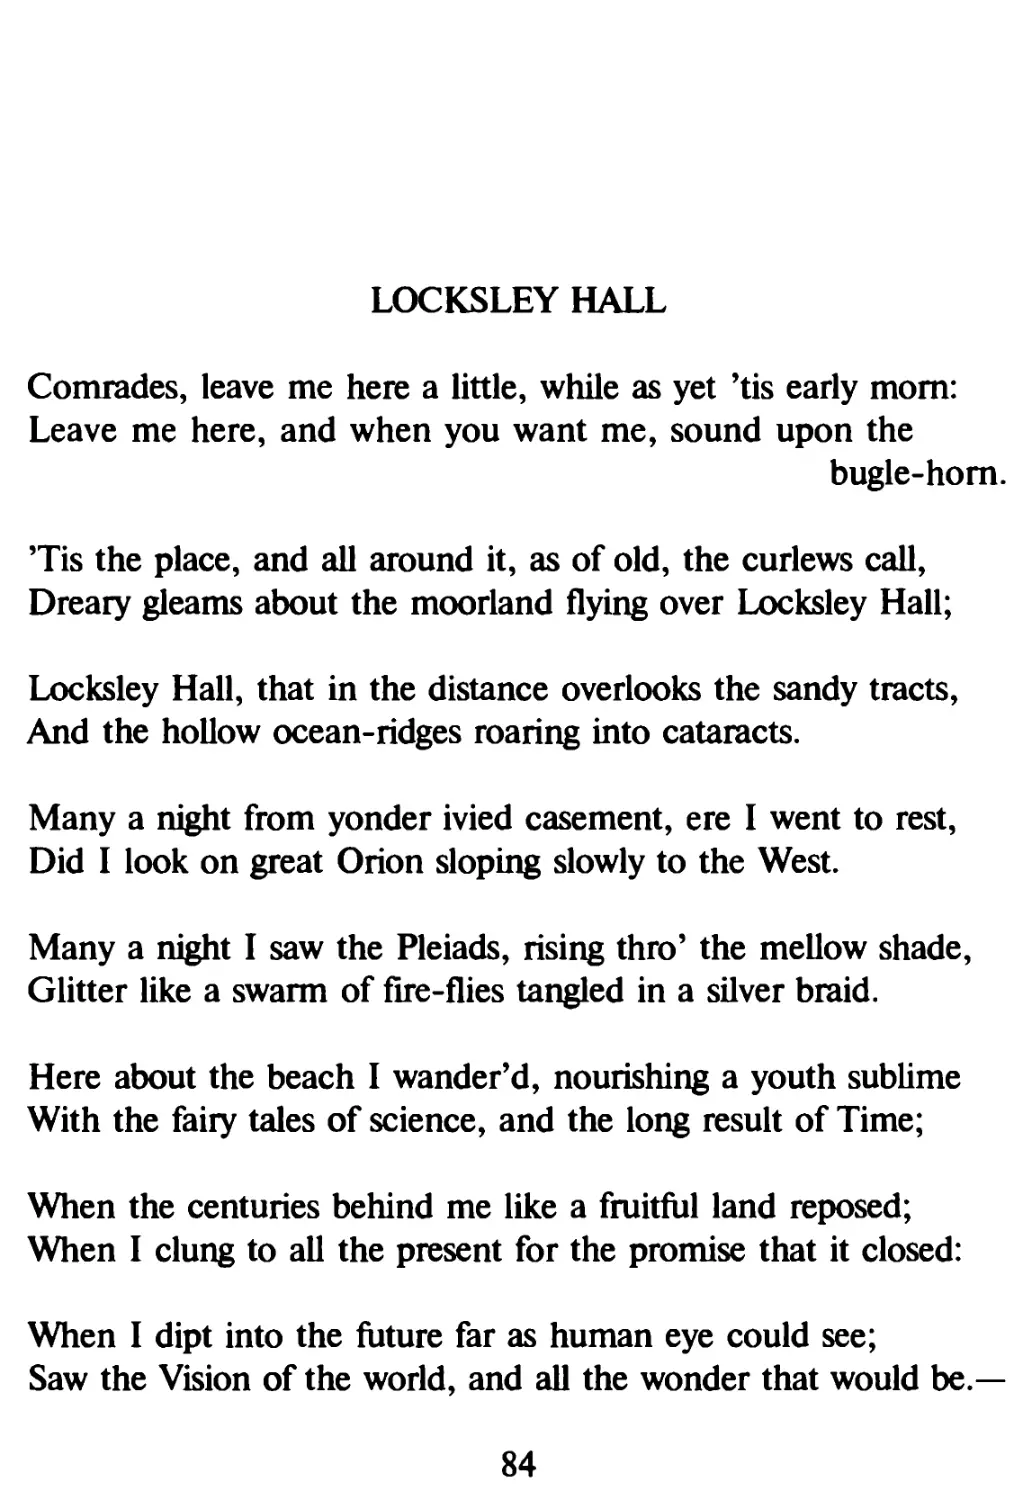 Locksley Hall